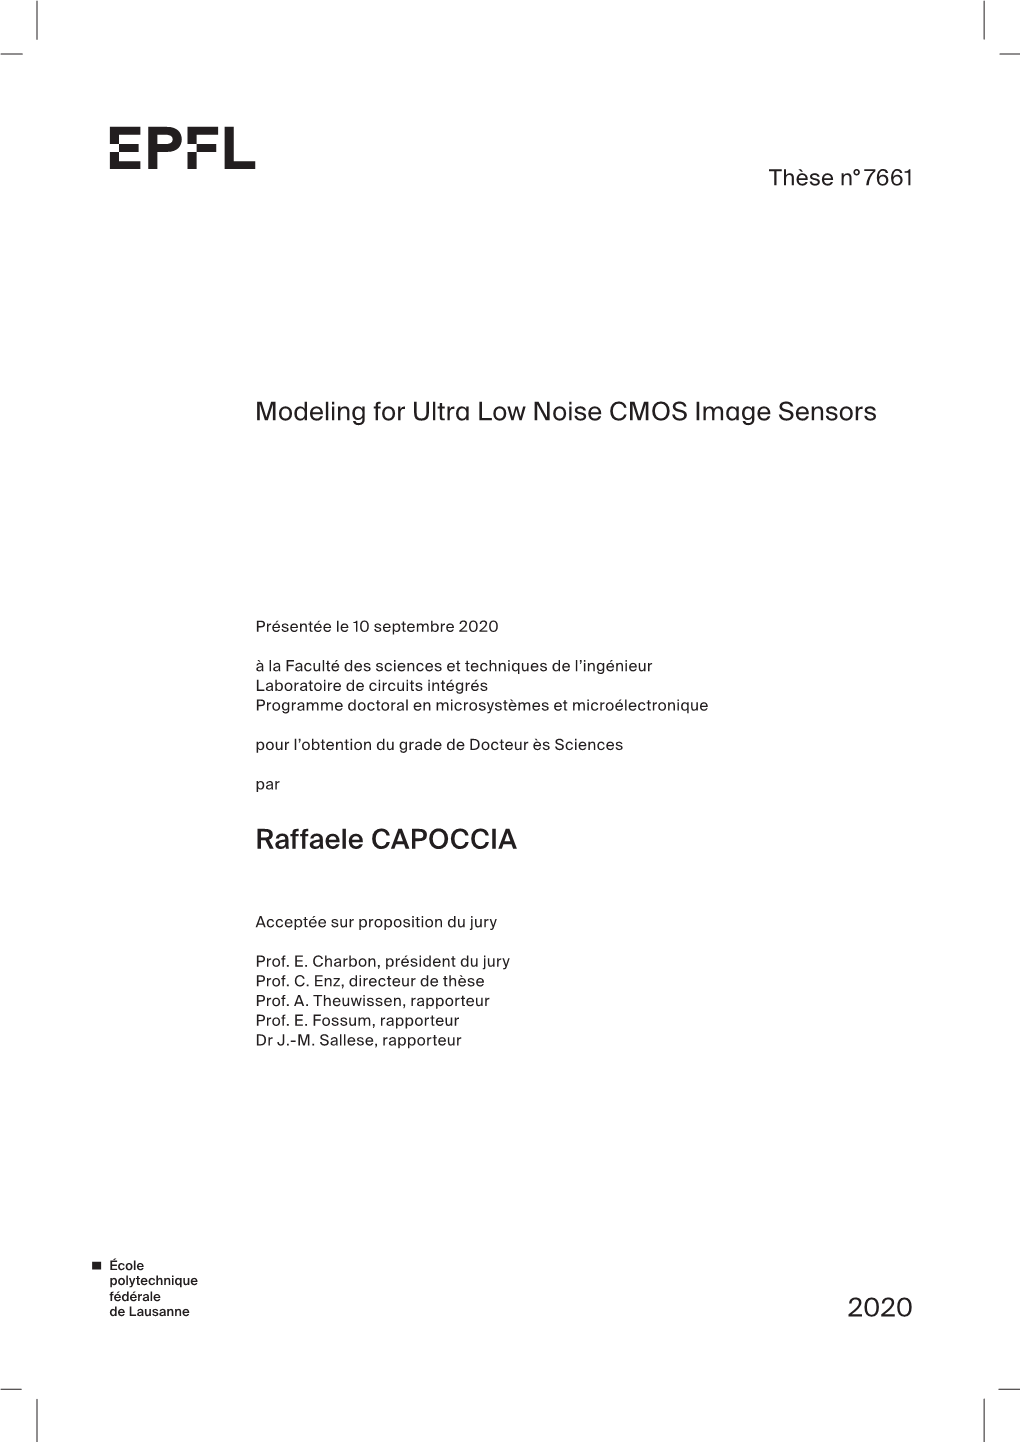 Modeling for Ultra Low Noise CMOS Image Sensors